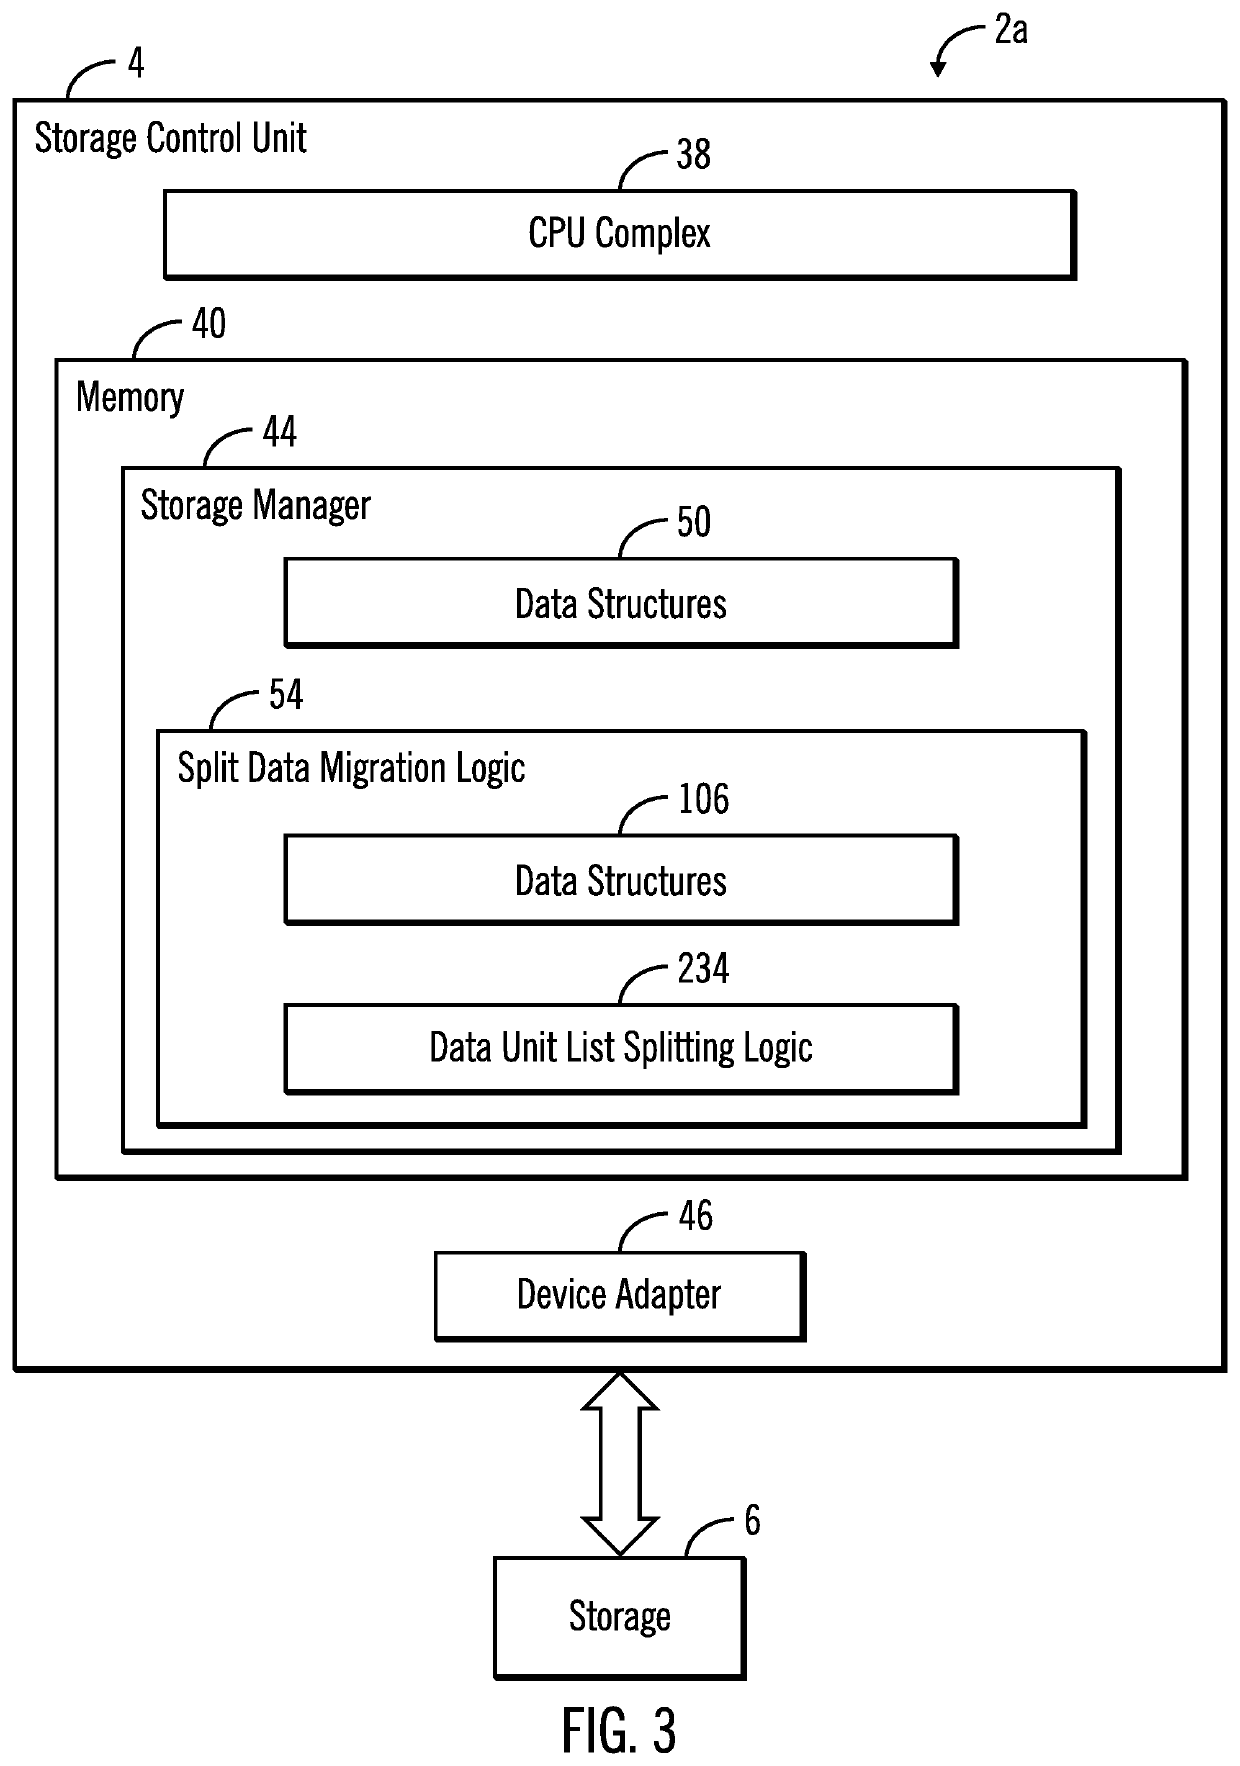 Split data migration in a data storage system